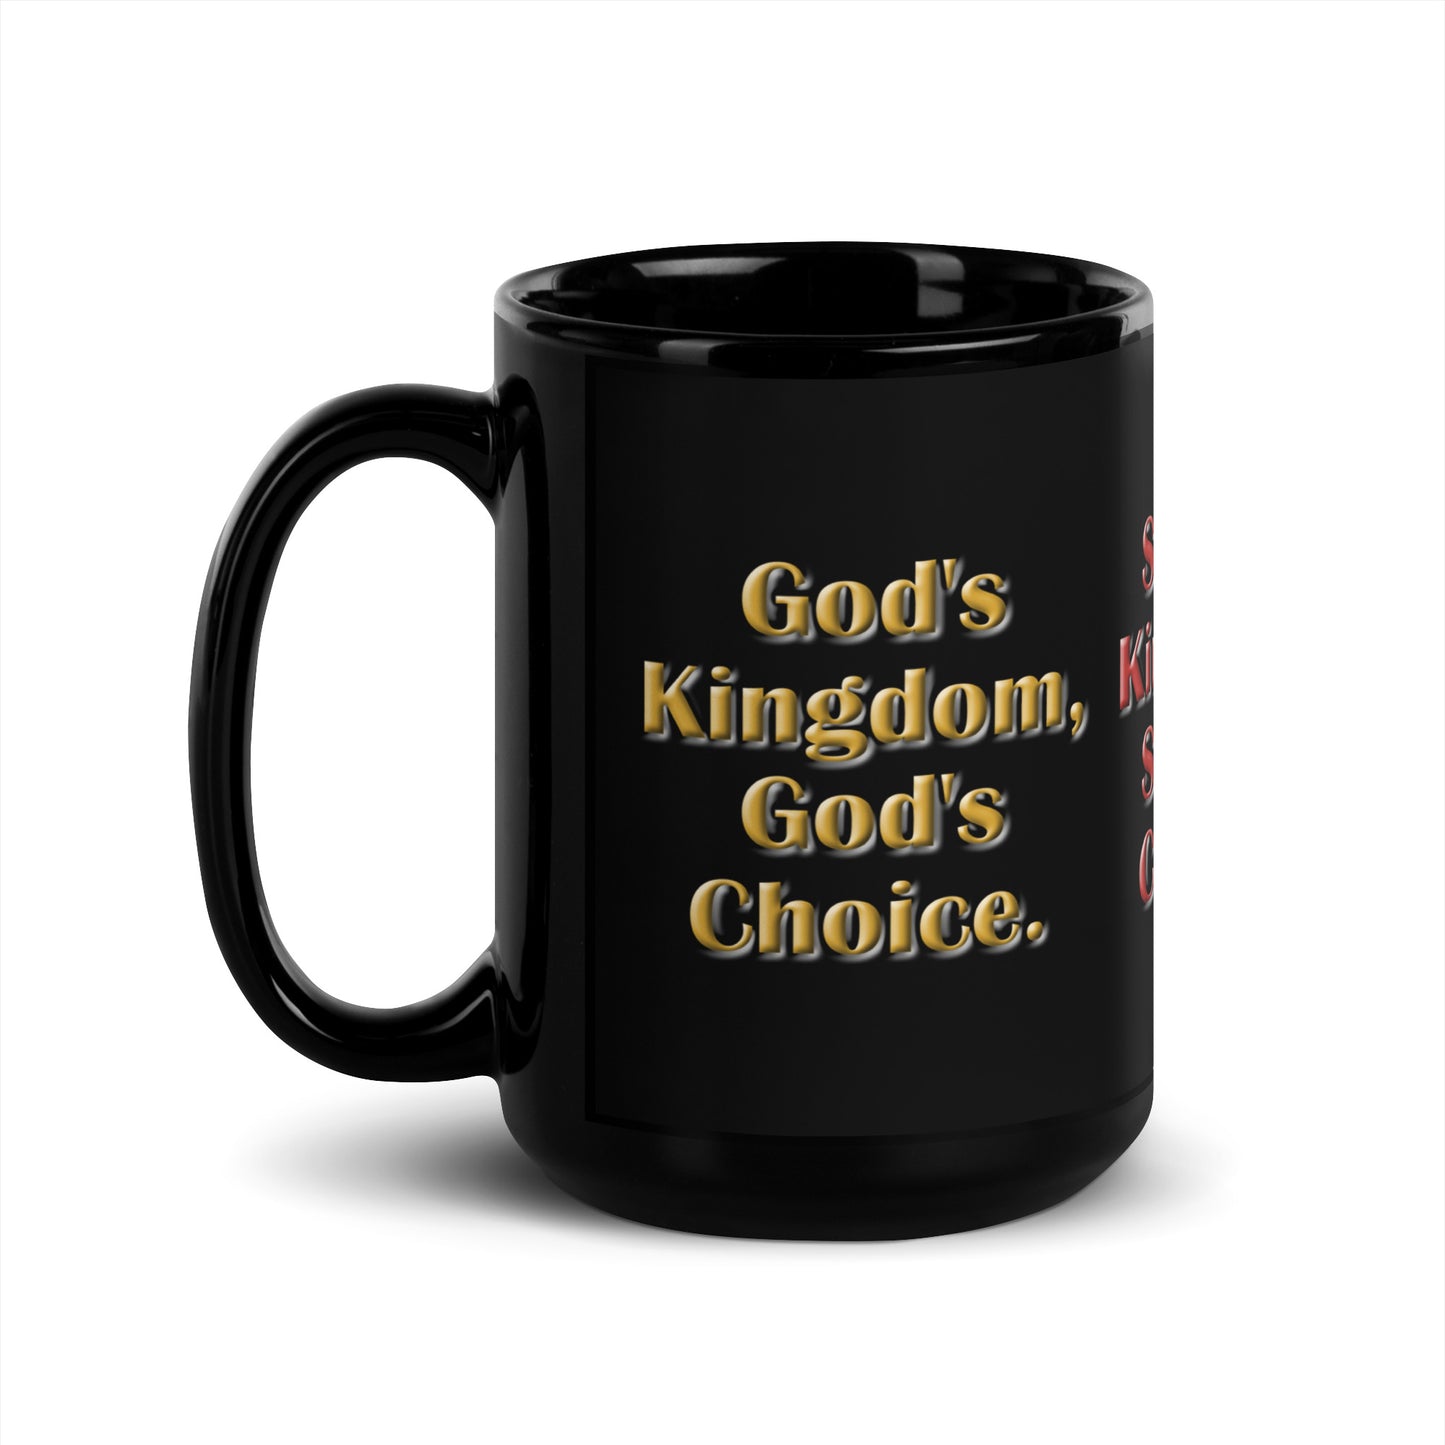 A012 Mug - Black Glossy Ceramic Mug Featuring the Text “God’s Kingdom, God’s Choice – Satan’s Kingdom, Satan’s Choice – Repent or Perish, Your Choice.”